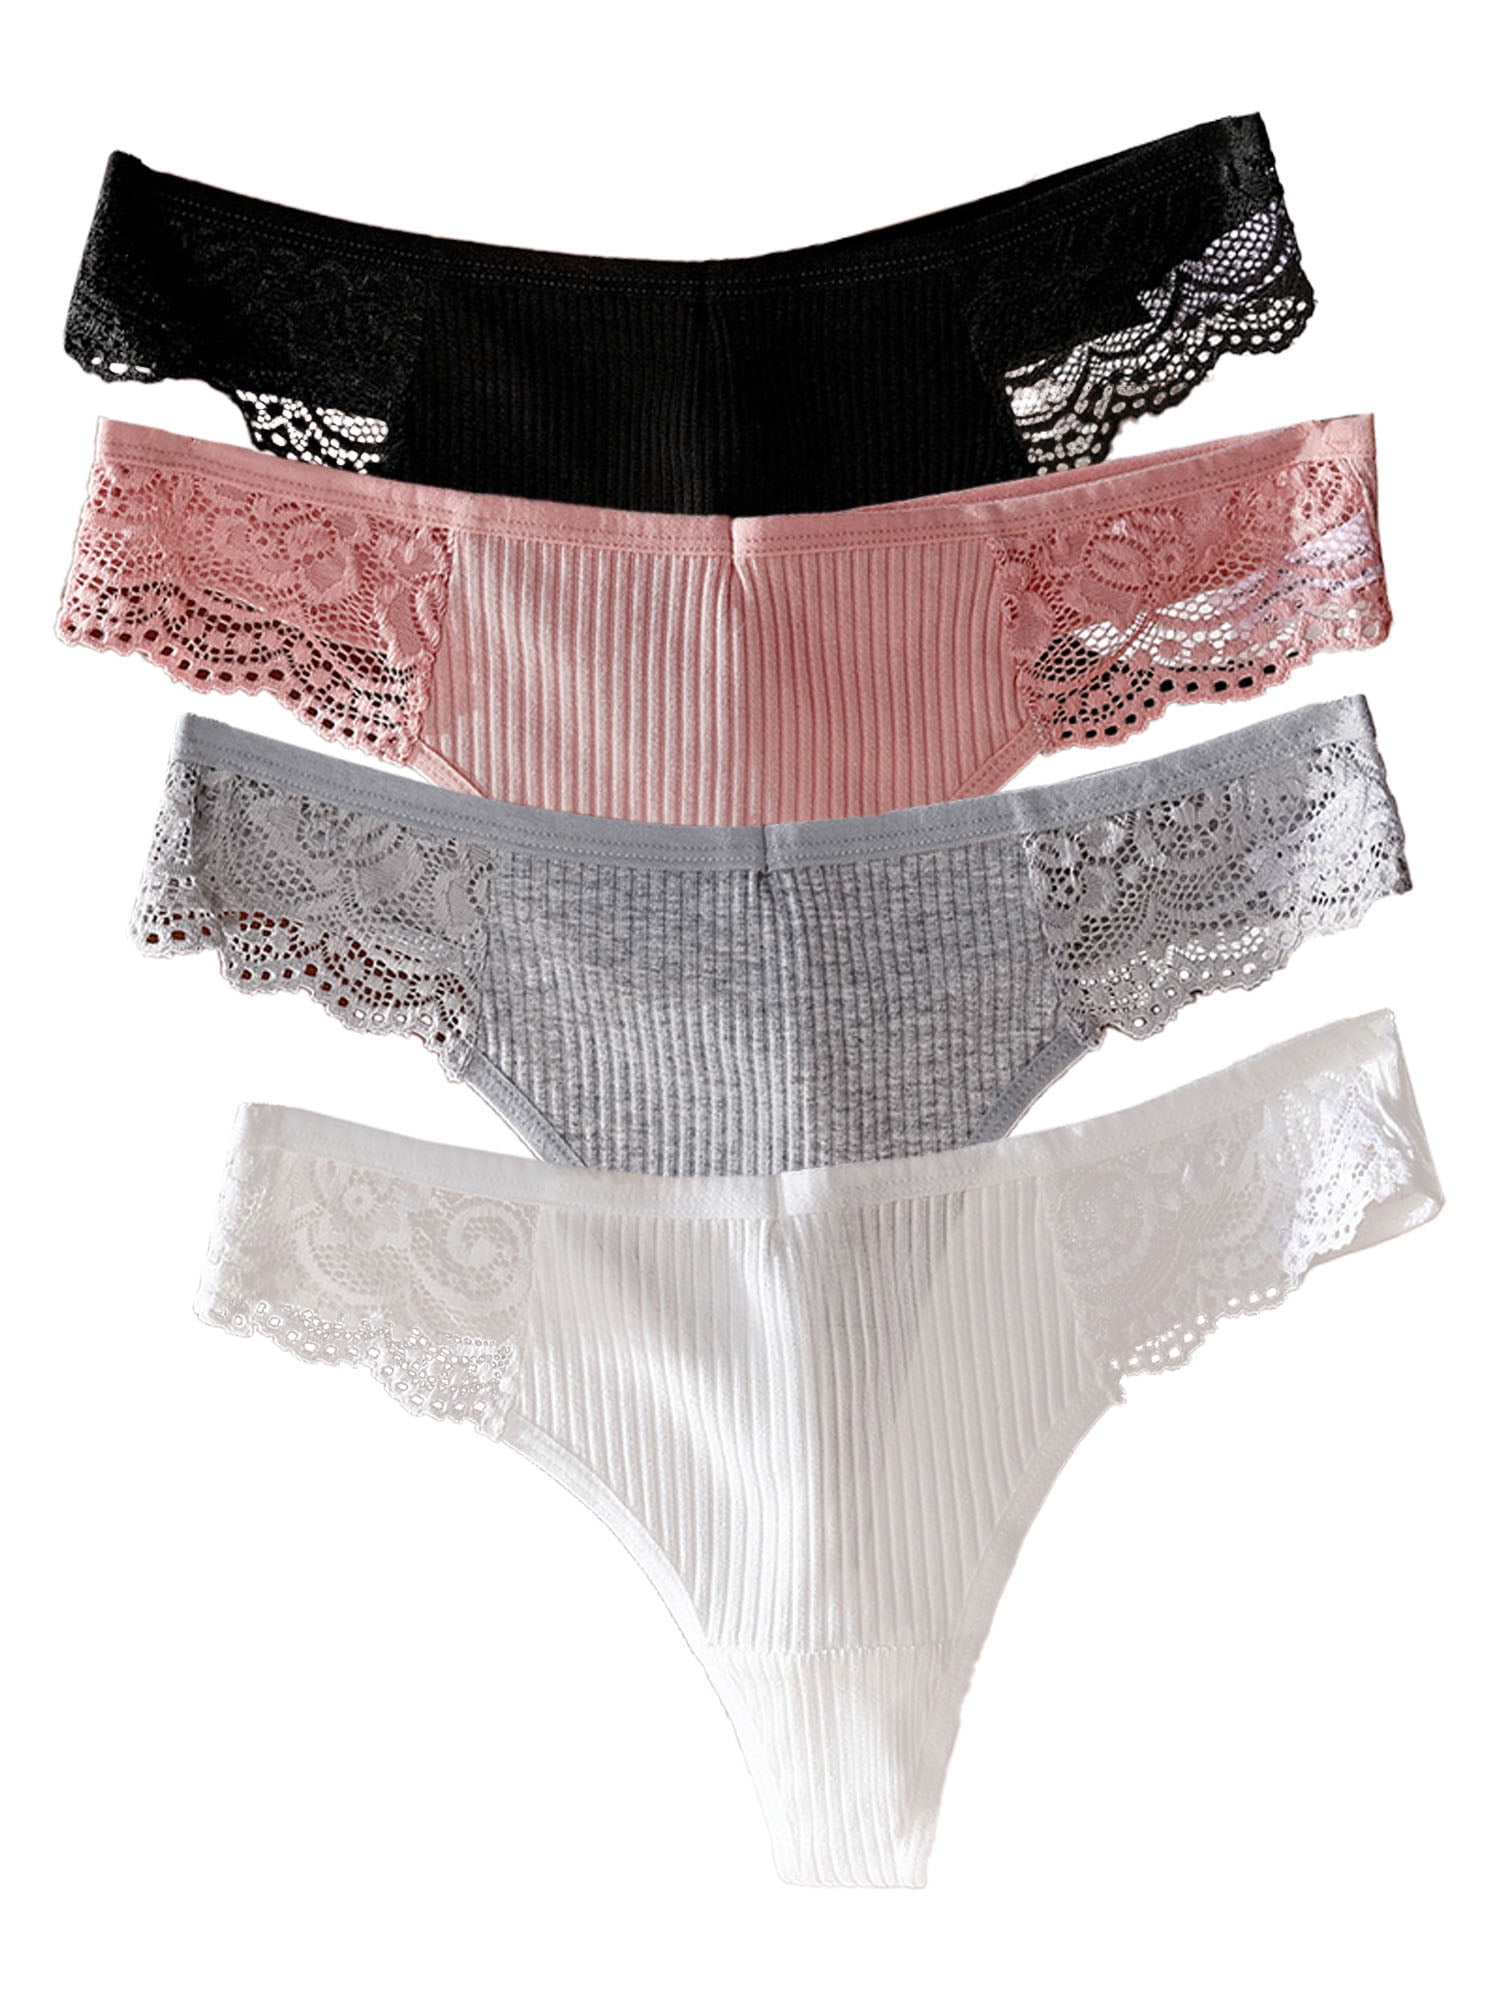 BeautyIn Women's Lace Thongs Underwear Sexy Lingerie Tanga Pack of 4 